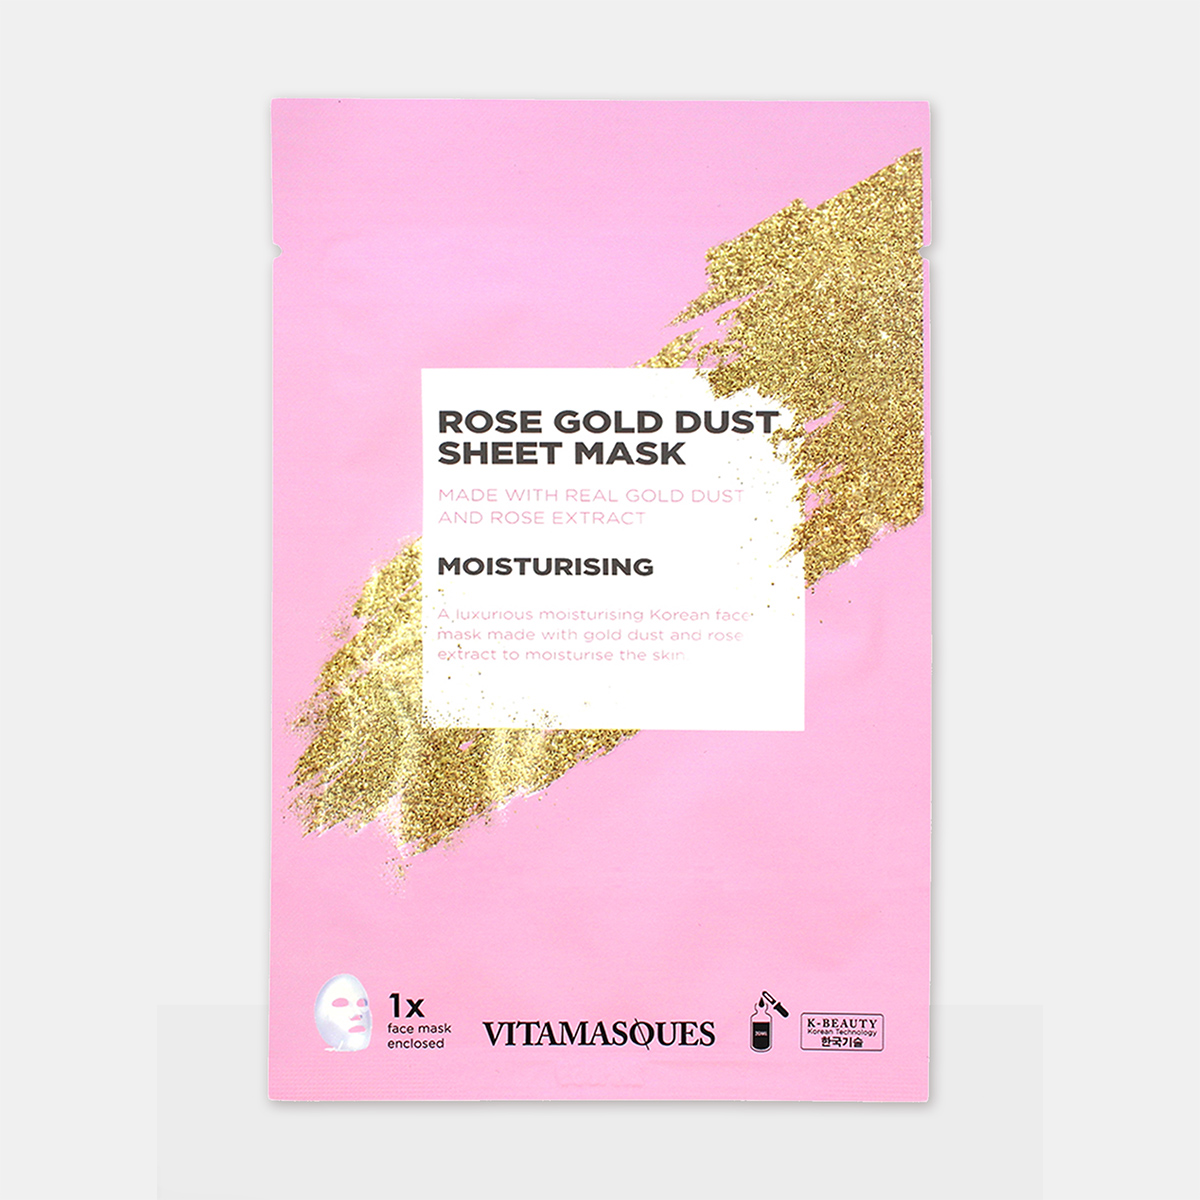 Rose gold dust sheet mask